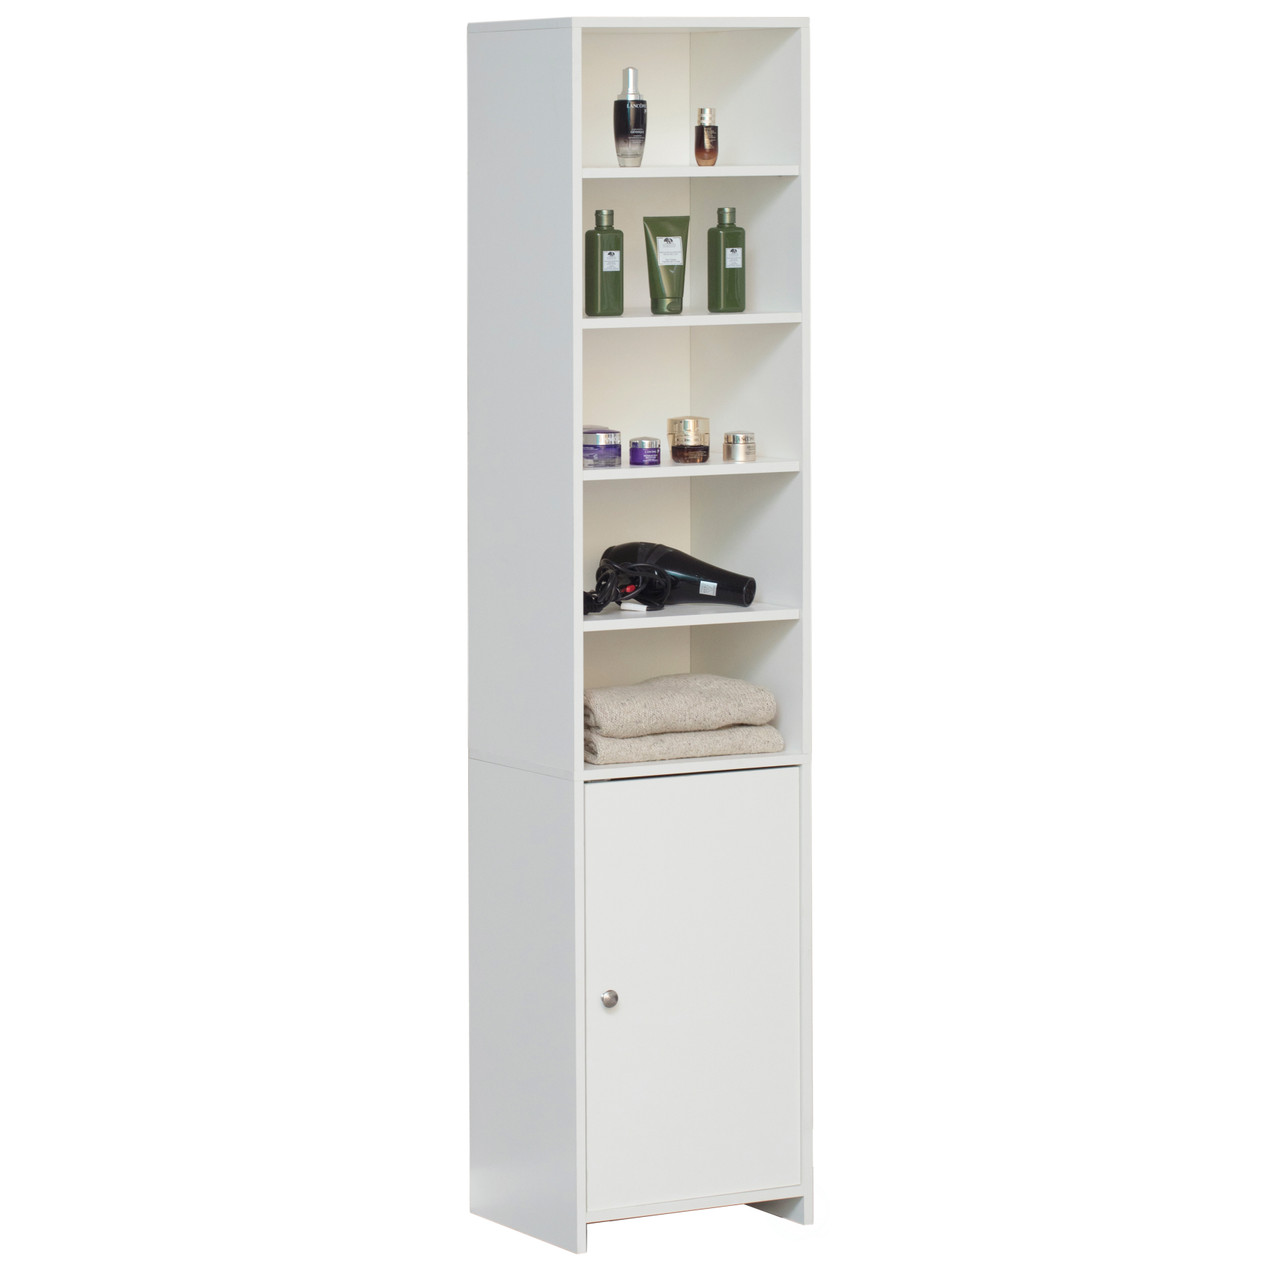 Tall Bathroom Storage Cabinet, Freestanding Linen Tower Slim Organizer,  White, 1 Unit - Smith's Food and Drug